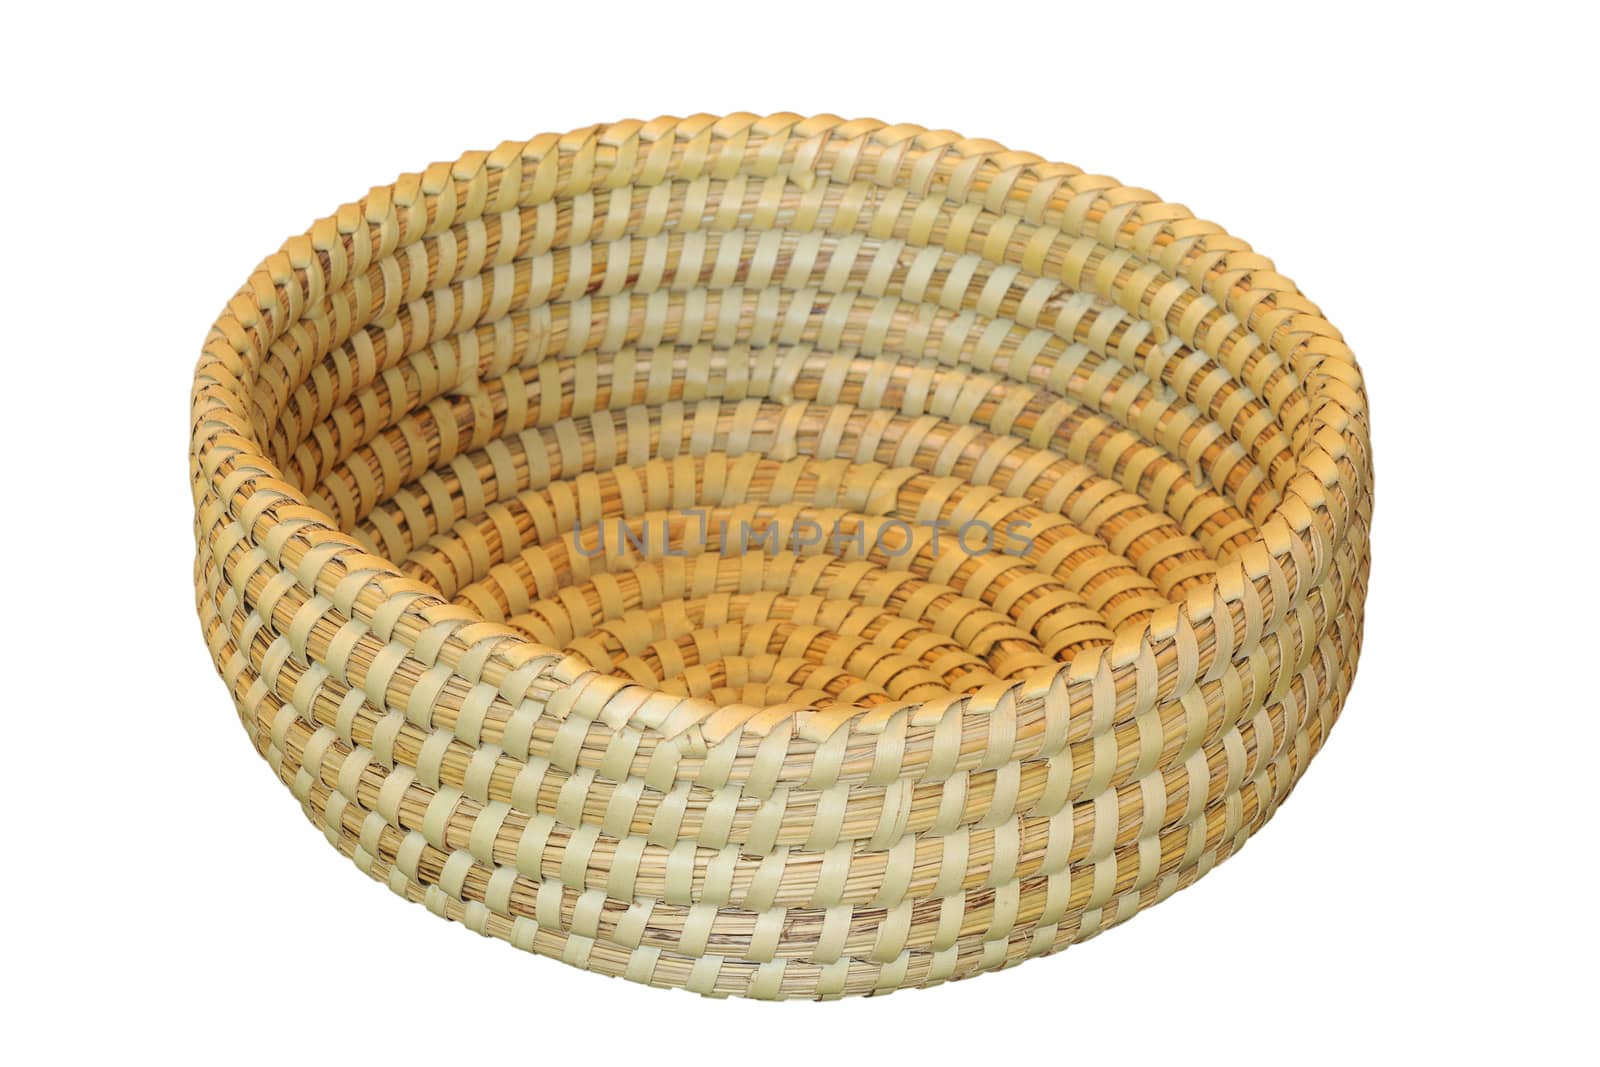 trellis round basket on white background by taviphoto